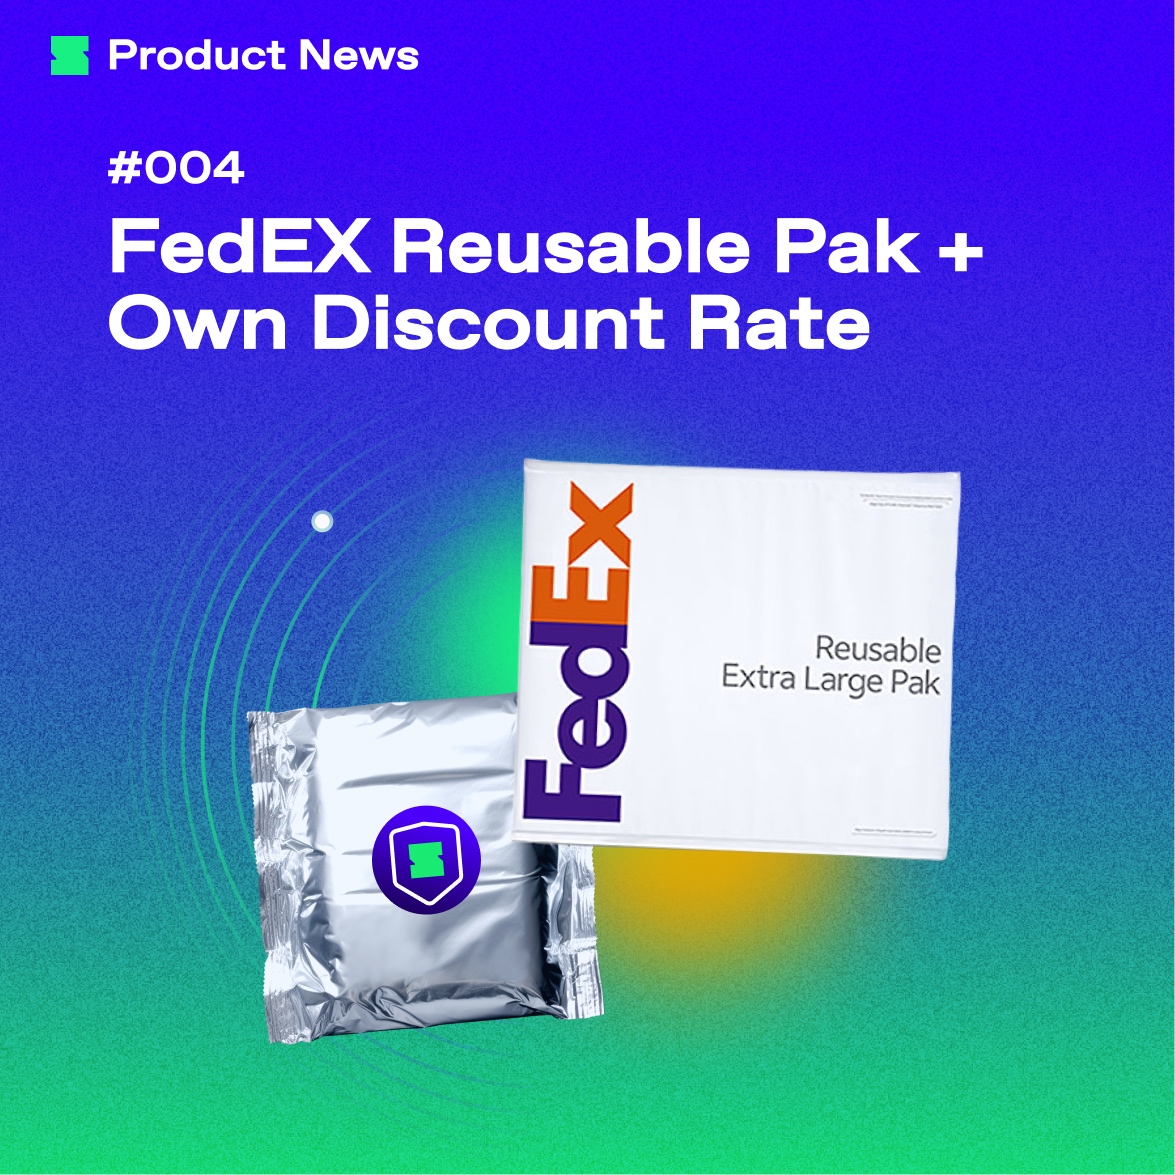 FedEx Reusable Pak by Spaceship Pro